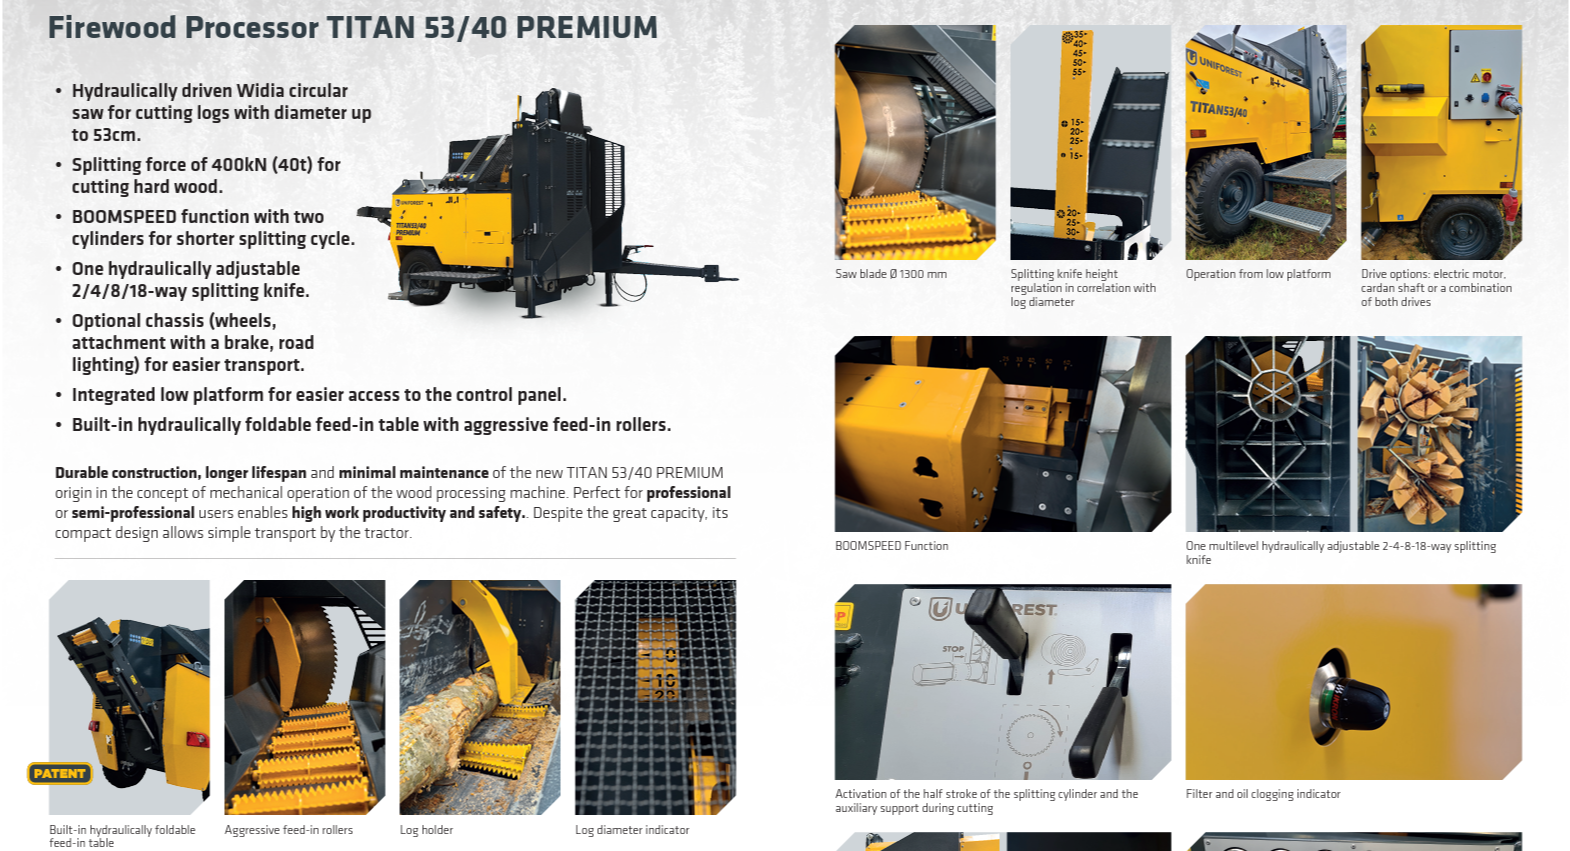 titan 53/40 premium specification sheet